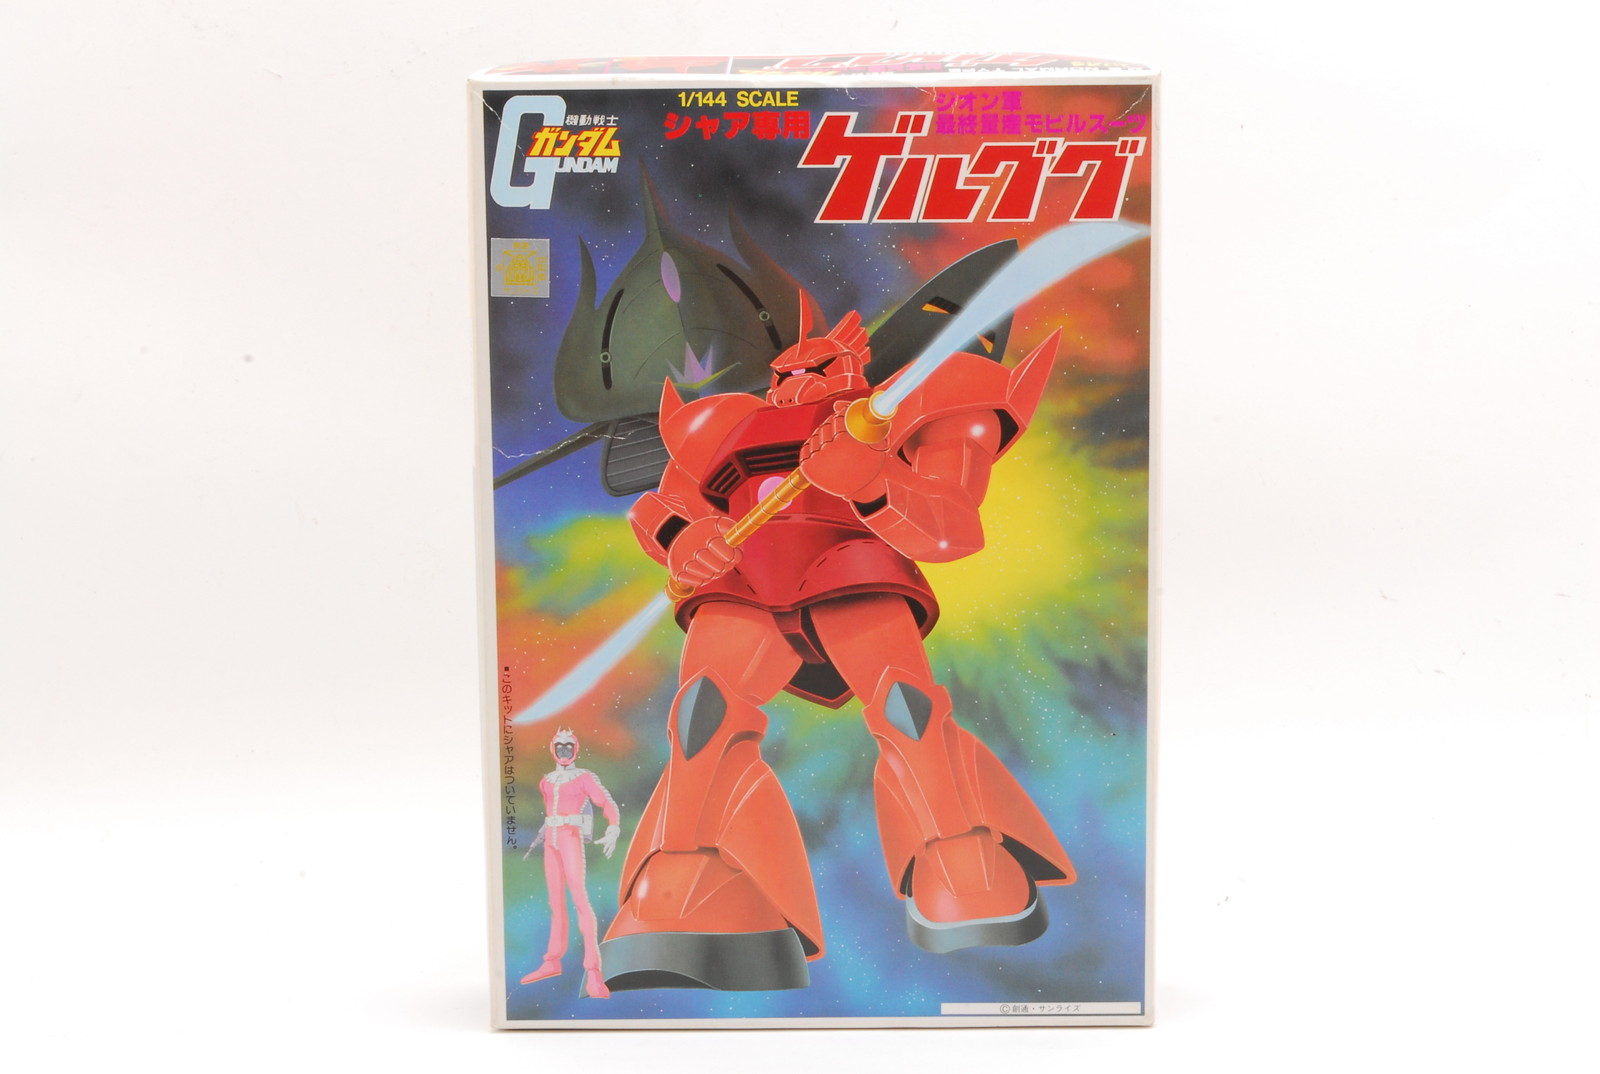 PROMOTION. UNUSED BANDAI 1/144 Char’s Gelgoog Plastic Model Box, Manual from Japan